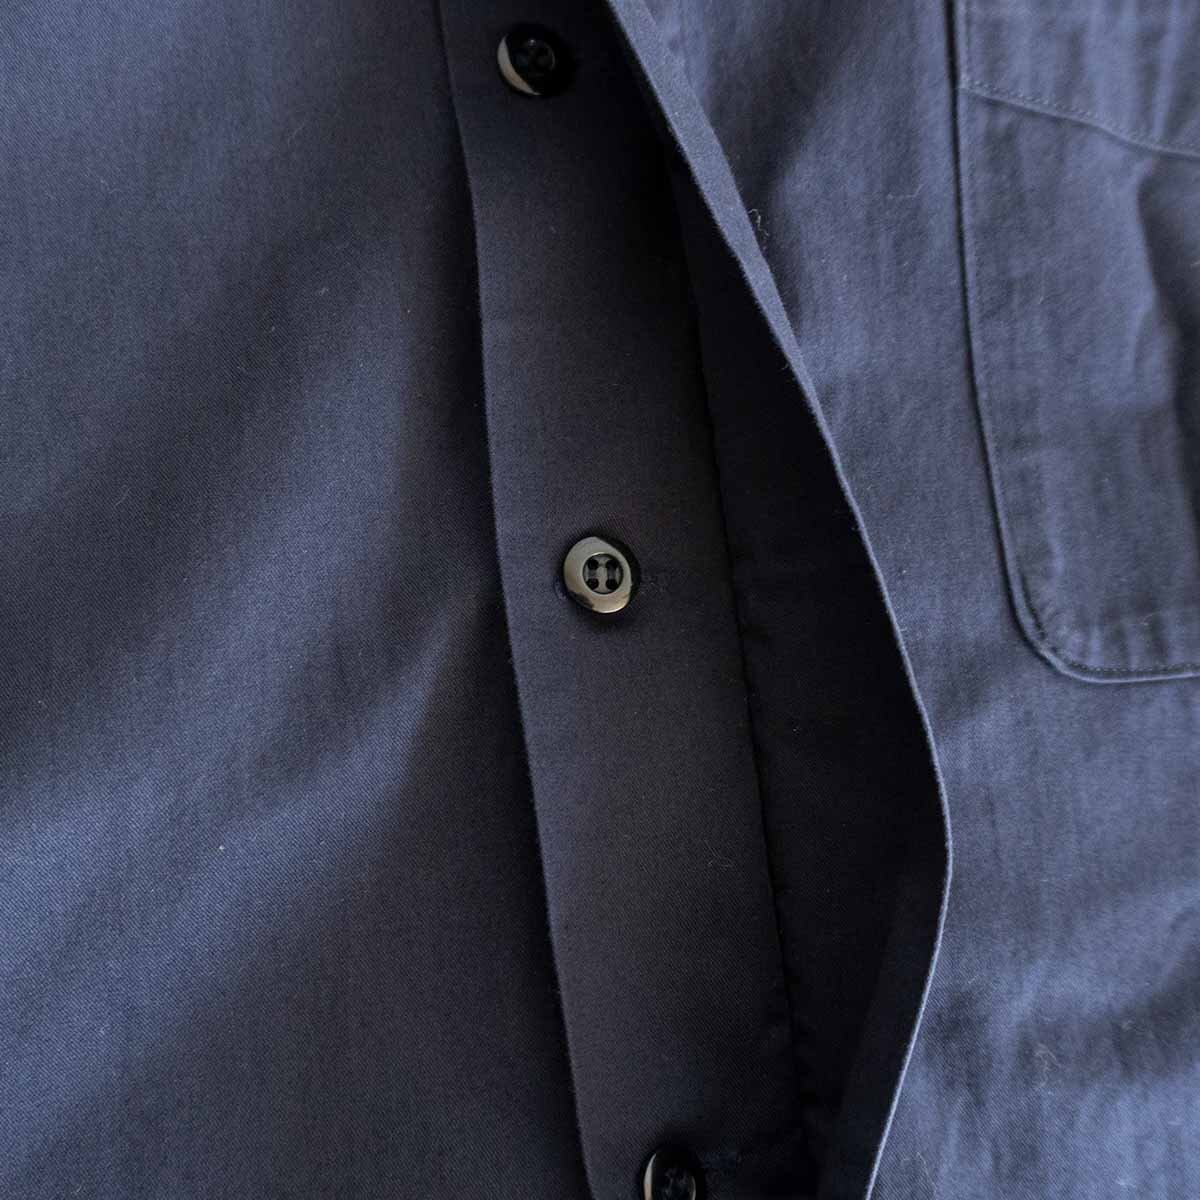 [ beautiful goods ]Y\'s for men[ big Silhouette cotton shirt ] navy YOHJI YAMAMOTO Yohji Yamamoto 2405088